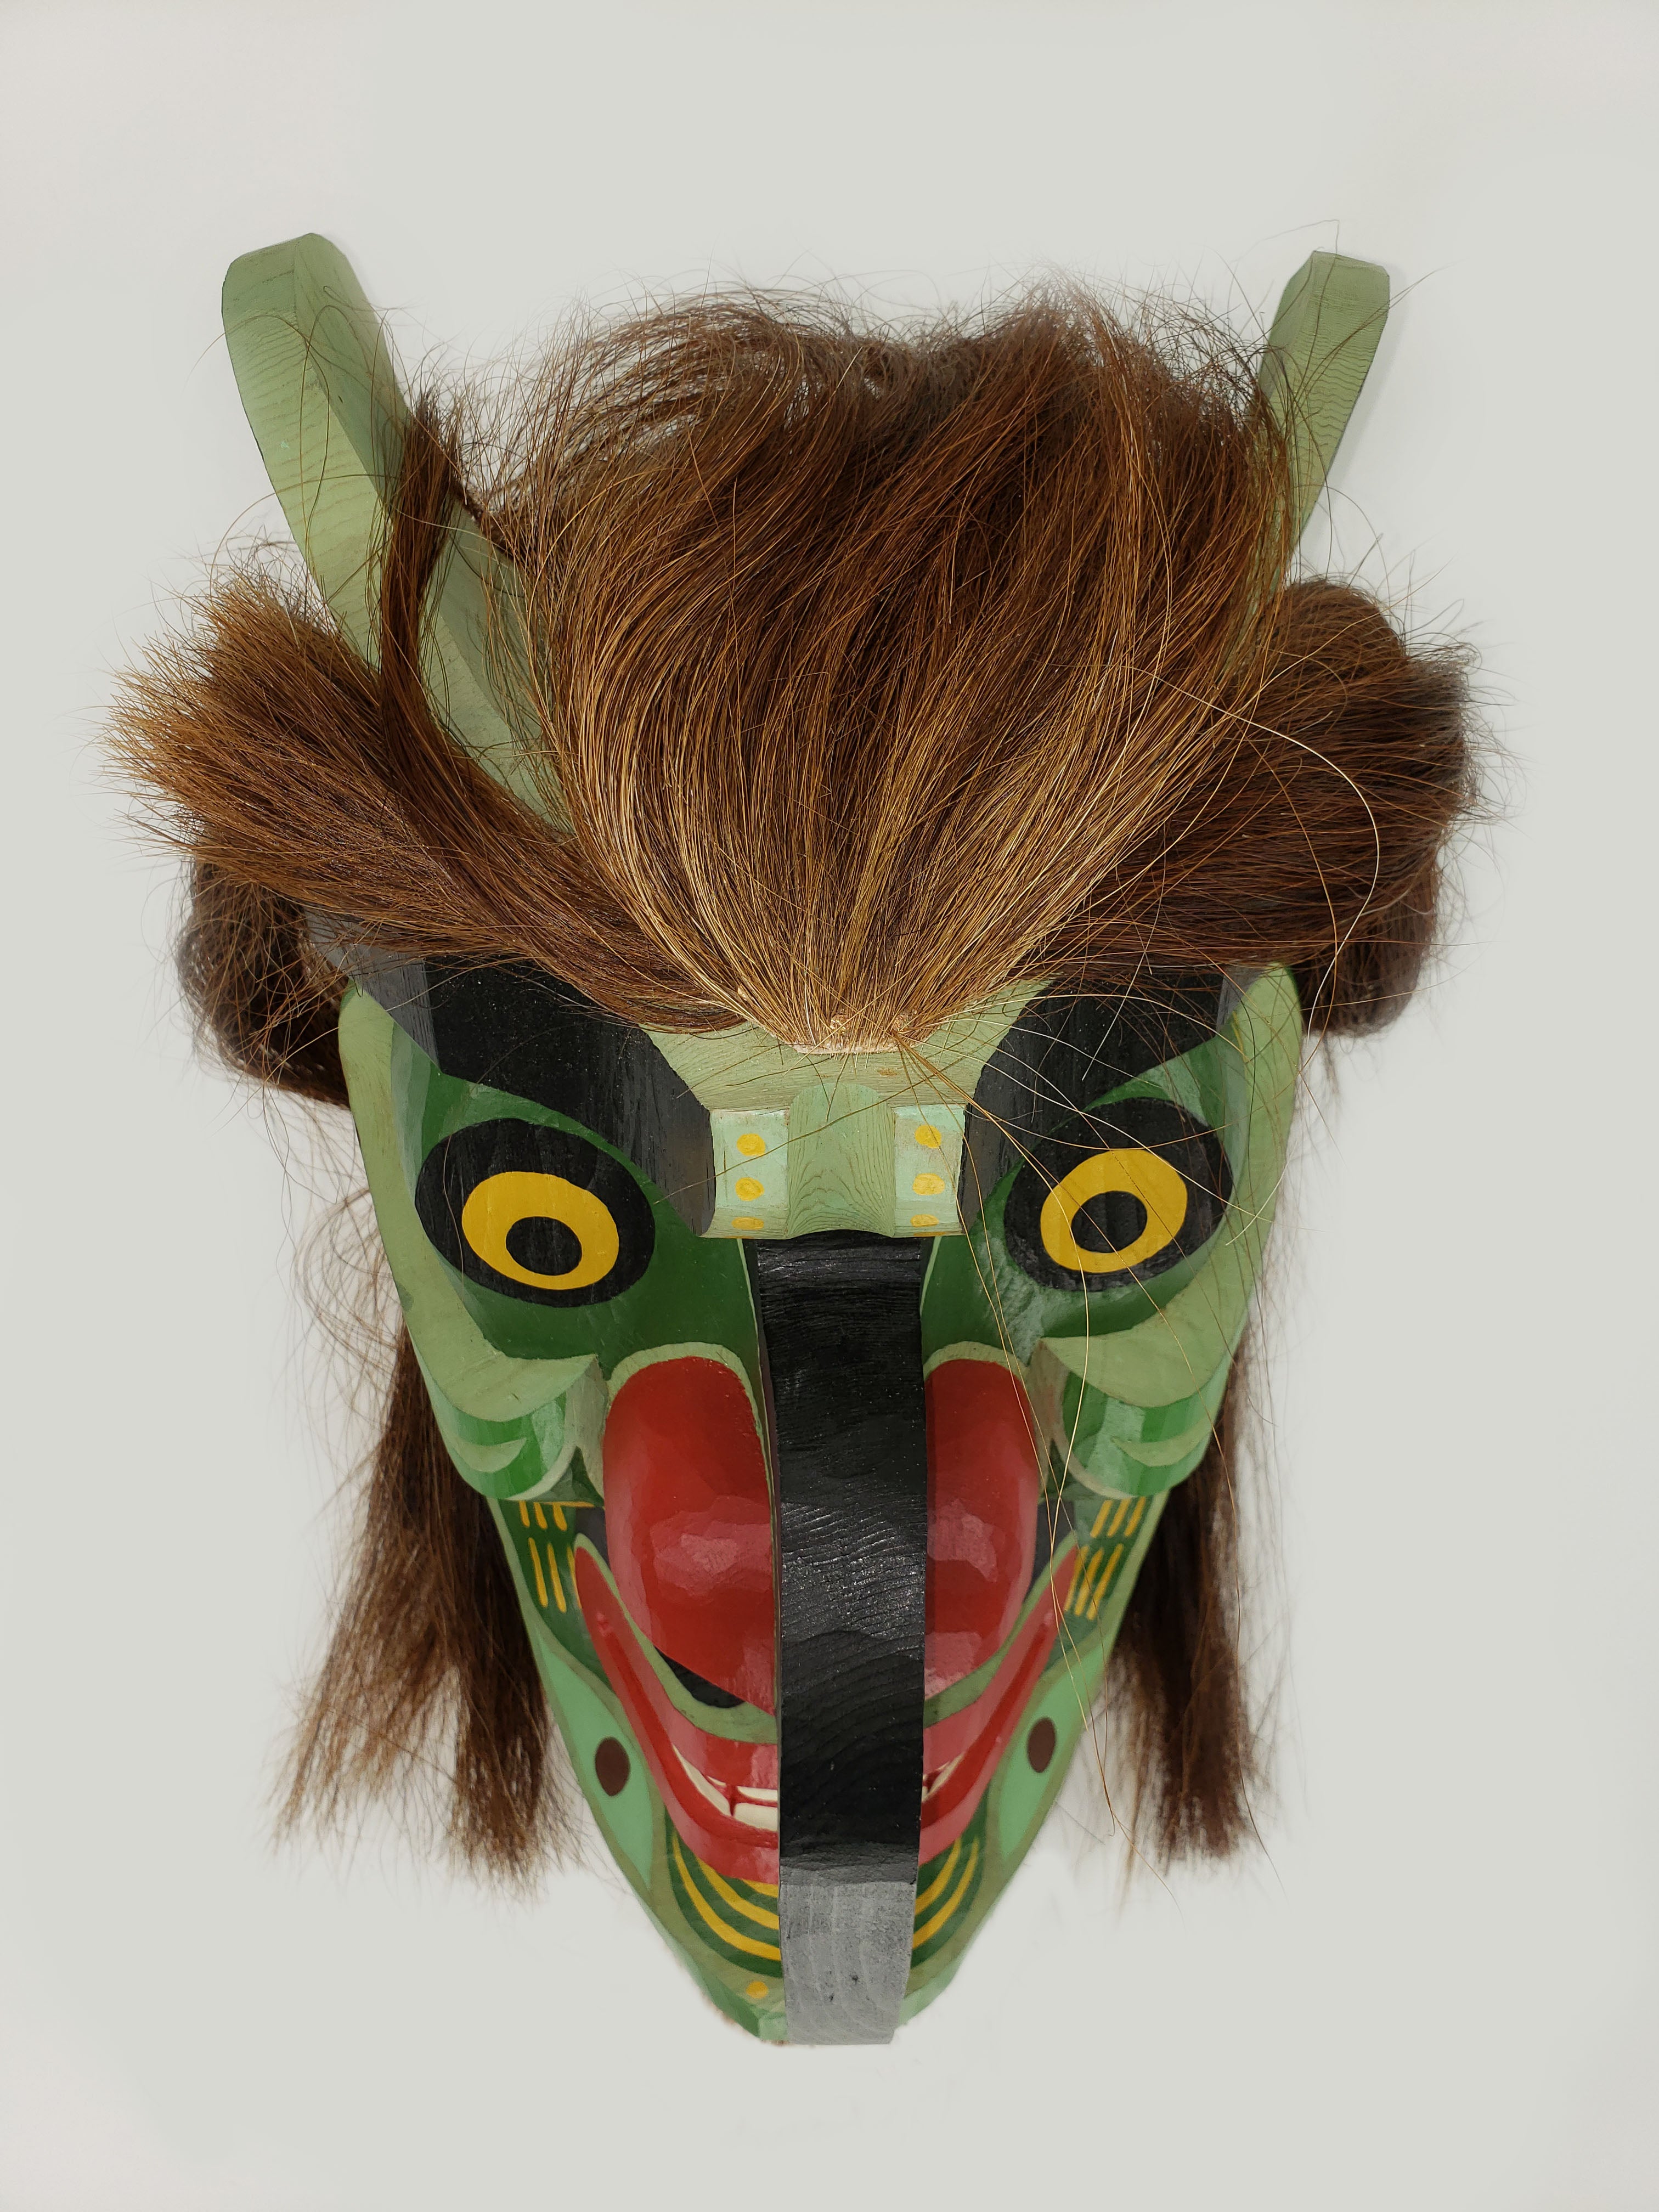 Bukwas/Wild Man of the Woods Mask by Kwakwaka'wakw artist Johnathan ...